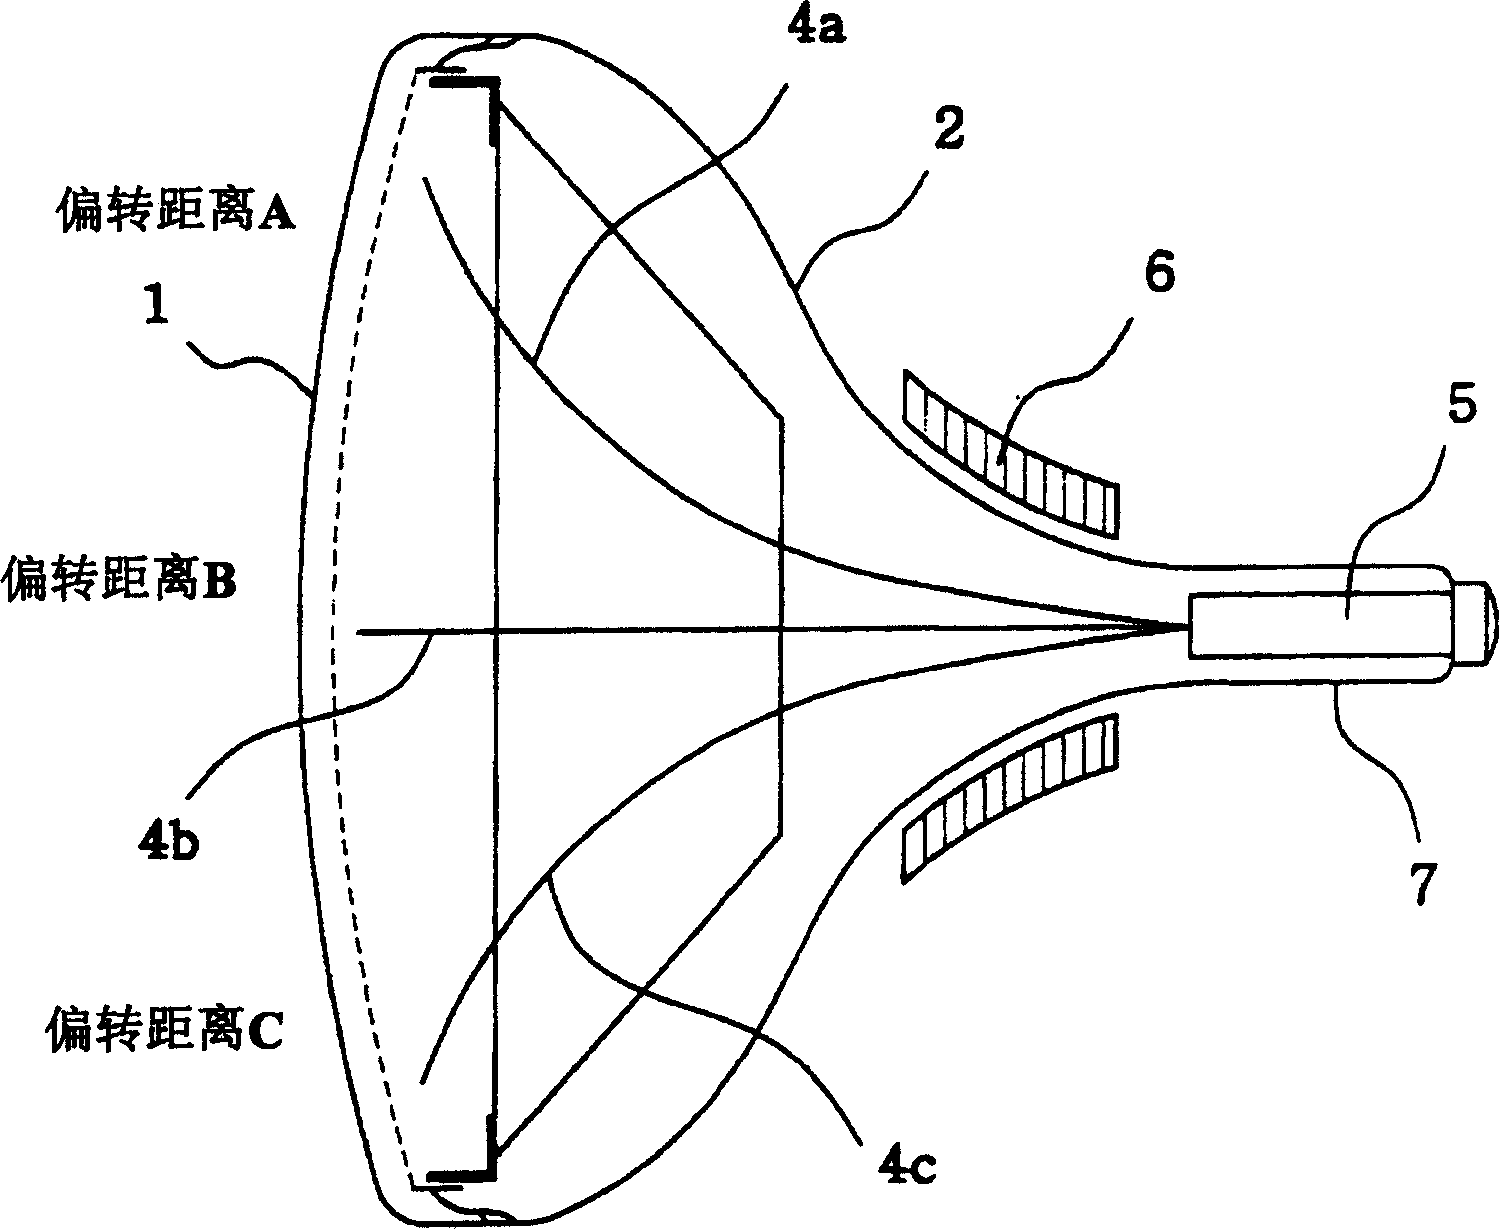 Horizontal deflection coil for deflection yoke